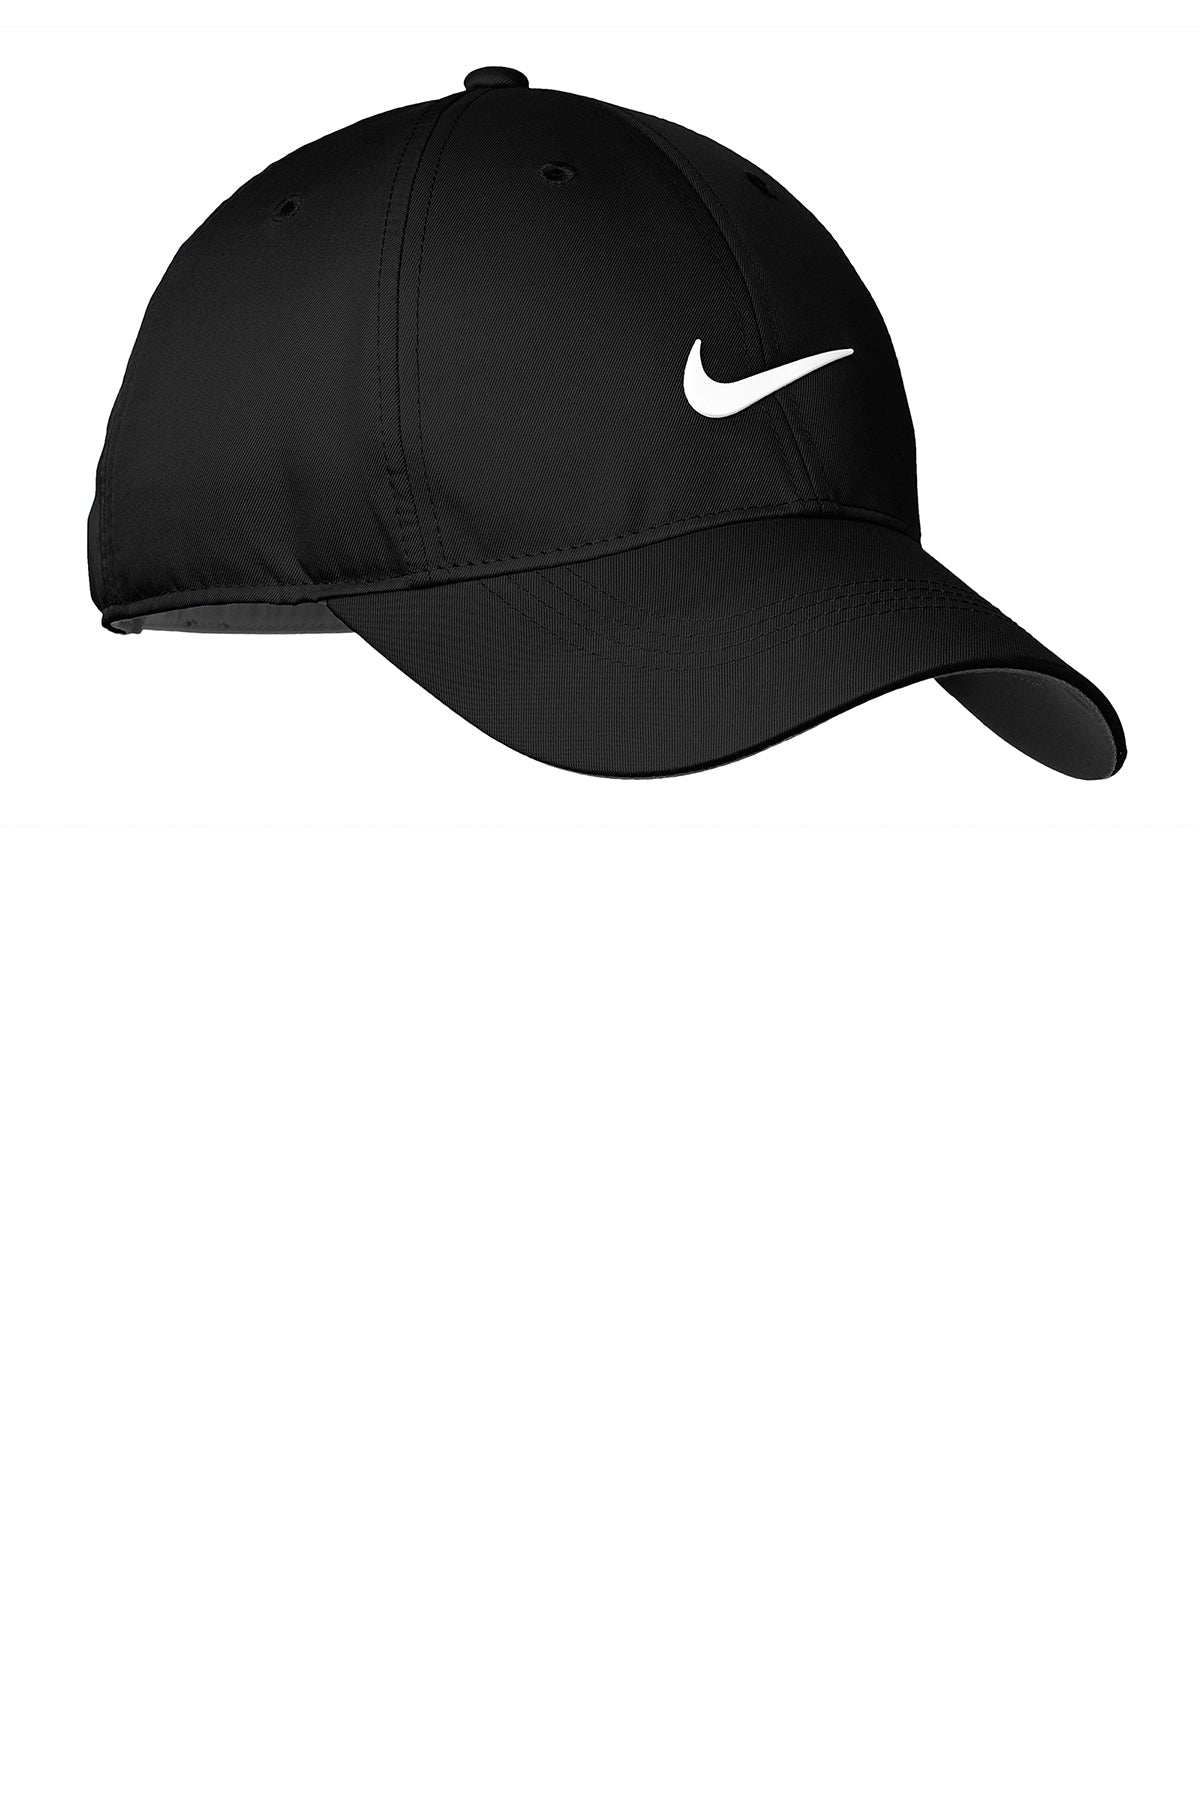 Nike Dri-FIT Swoosh Front Customized Caps, Black